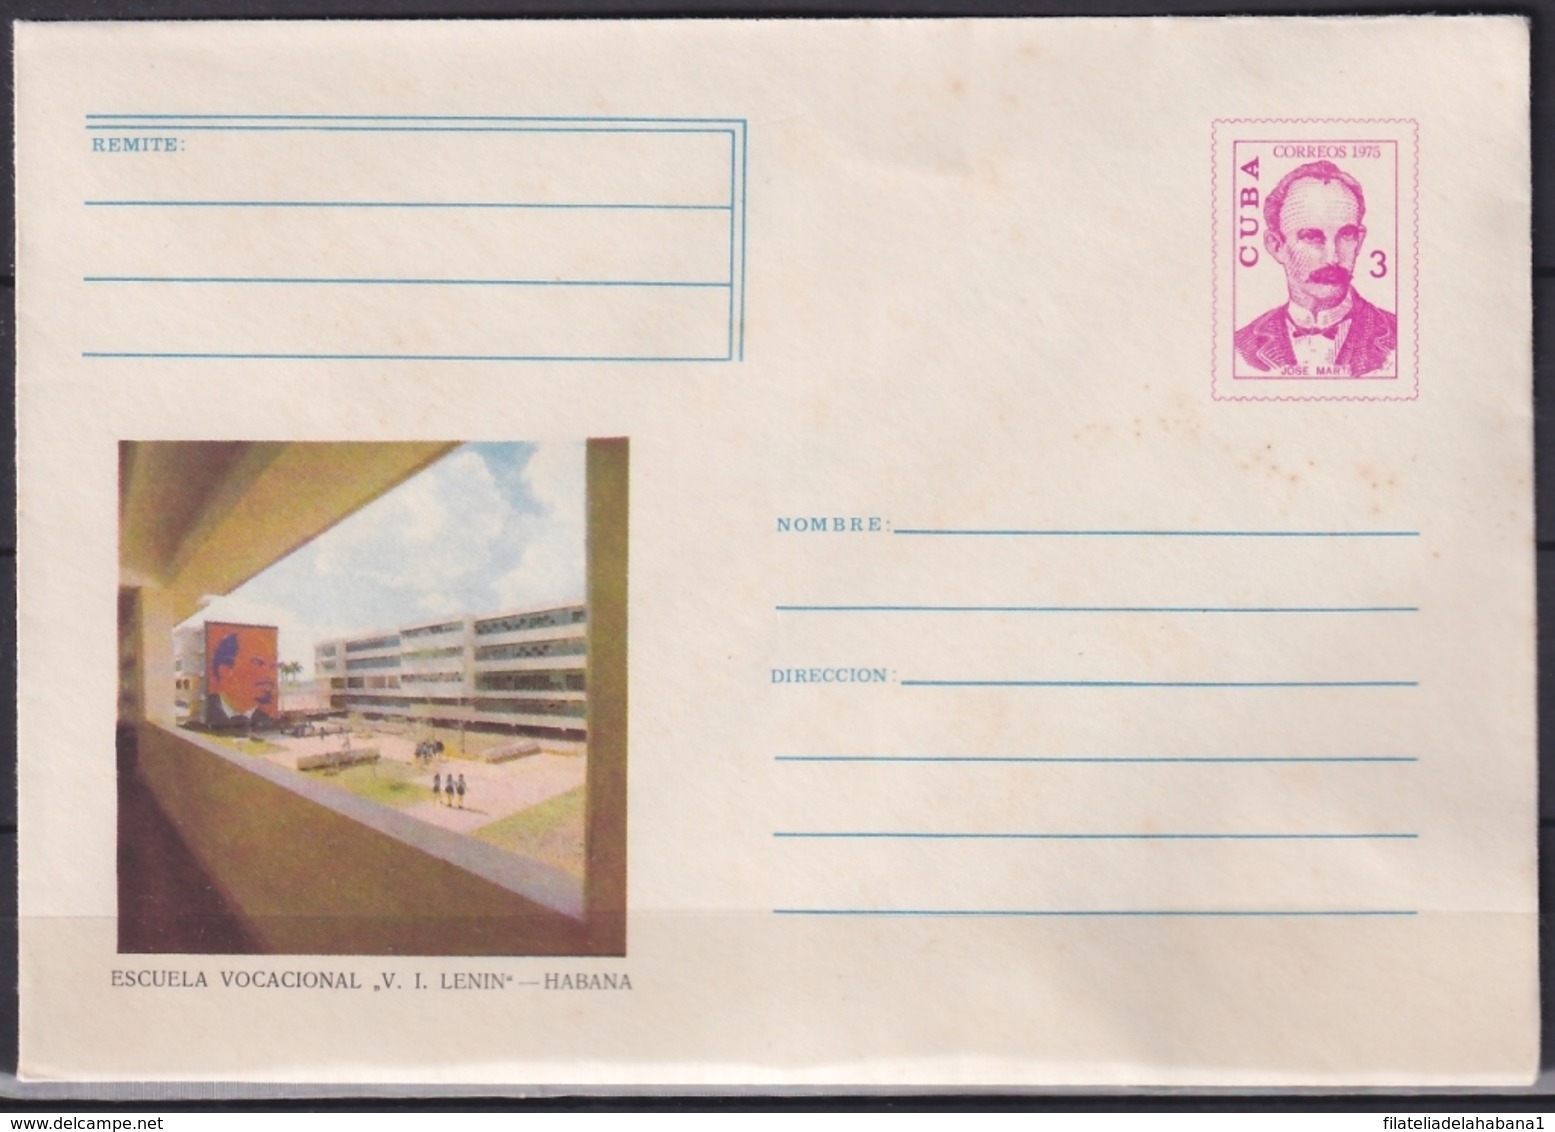 1975-EP-113 CUBA 1975 3c POSTAL STATIONERY COVER. HAVANA, ESCUELA VOCACIONAL LENIN. MANCHAS. - Storia Postale